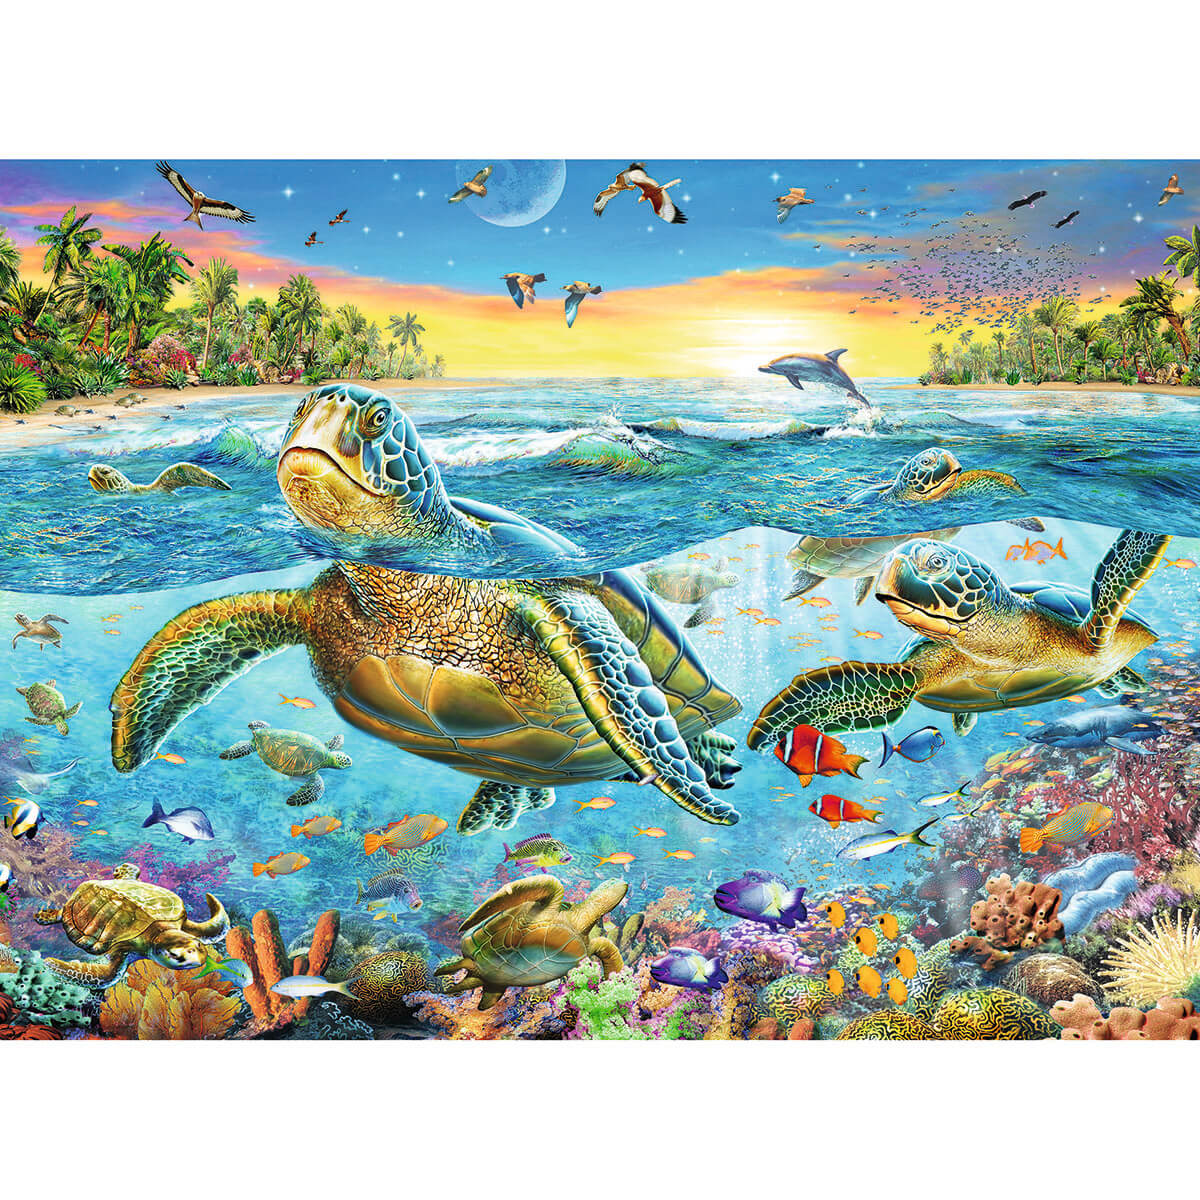 Ravensburger Swim with Sea Turtles 100 Piece Puzzle